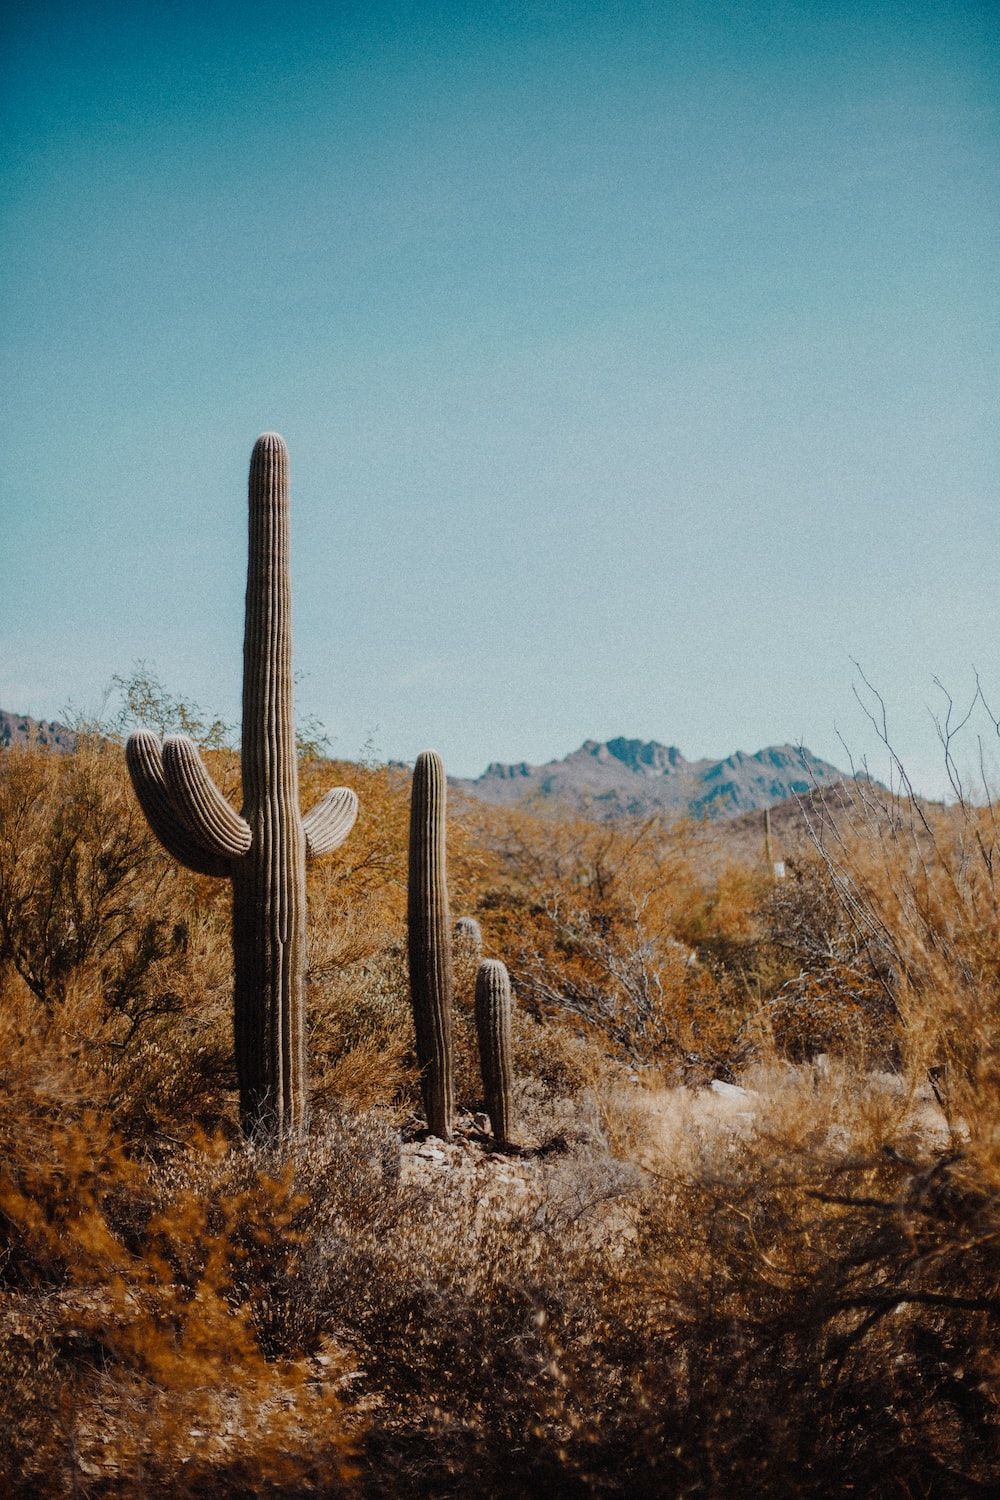 Cactus Desert Picture. Download Free Image